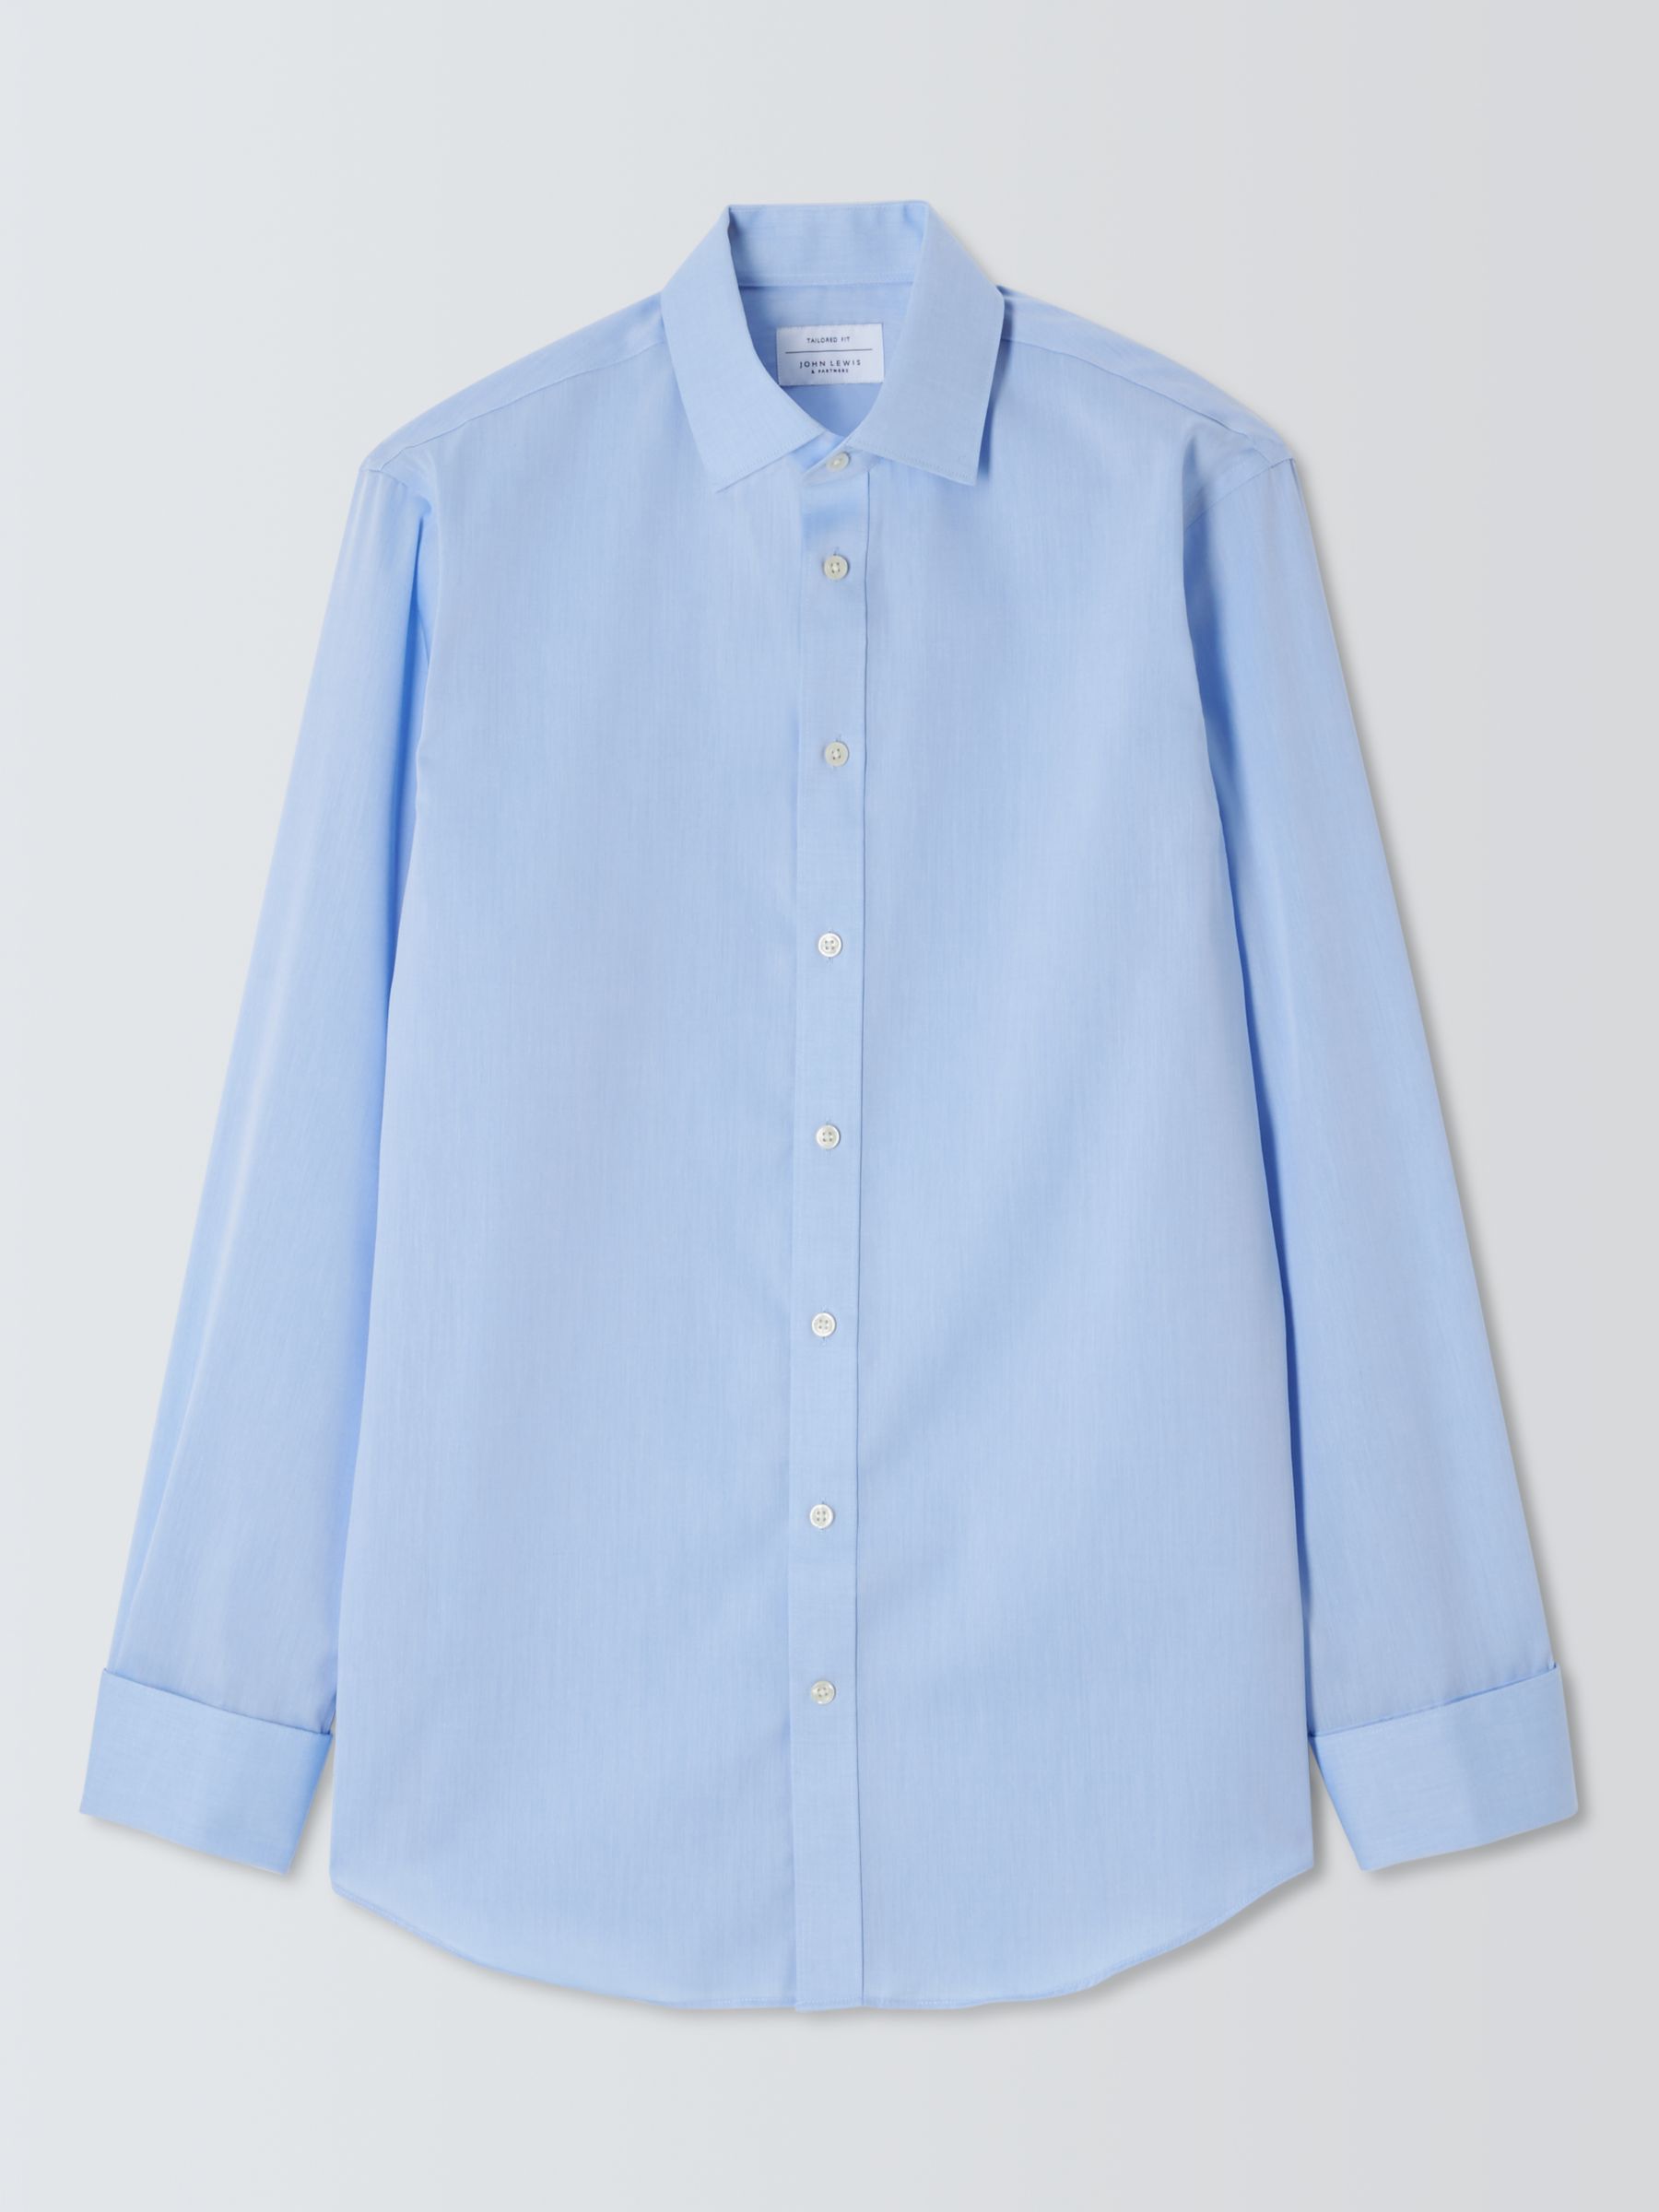 John Lewis Twill Tailored Fit Shirt, Blue at John Lewis & Partners